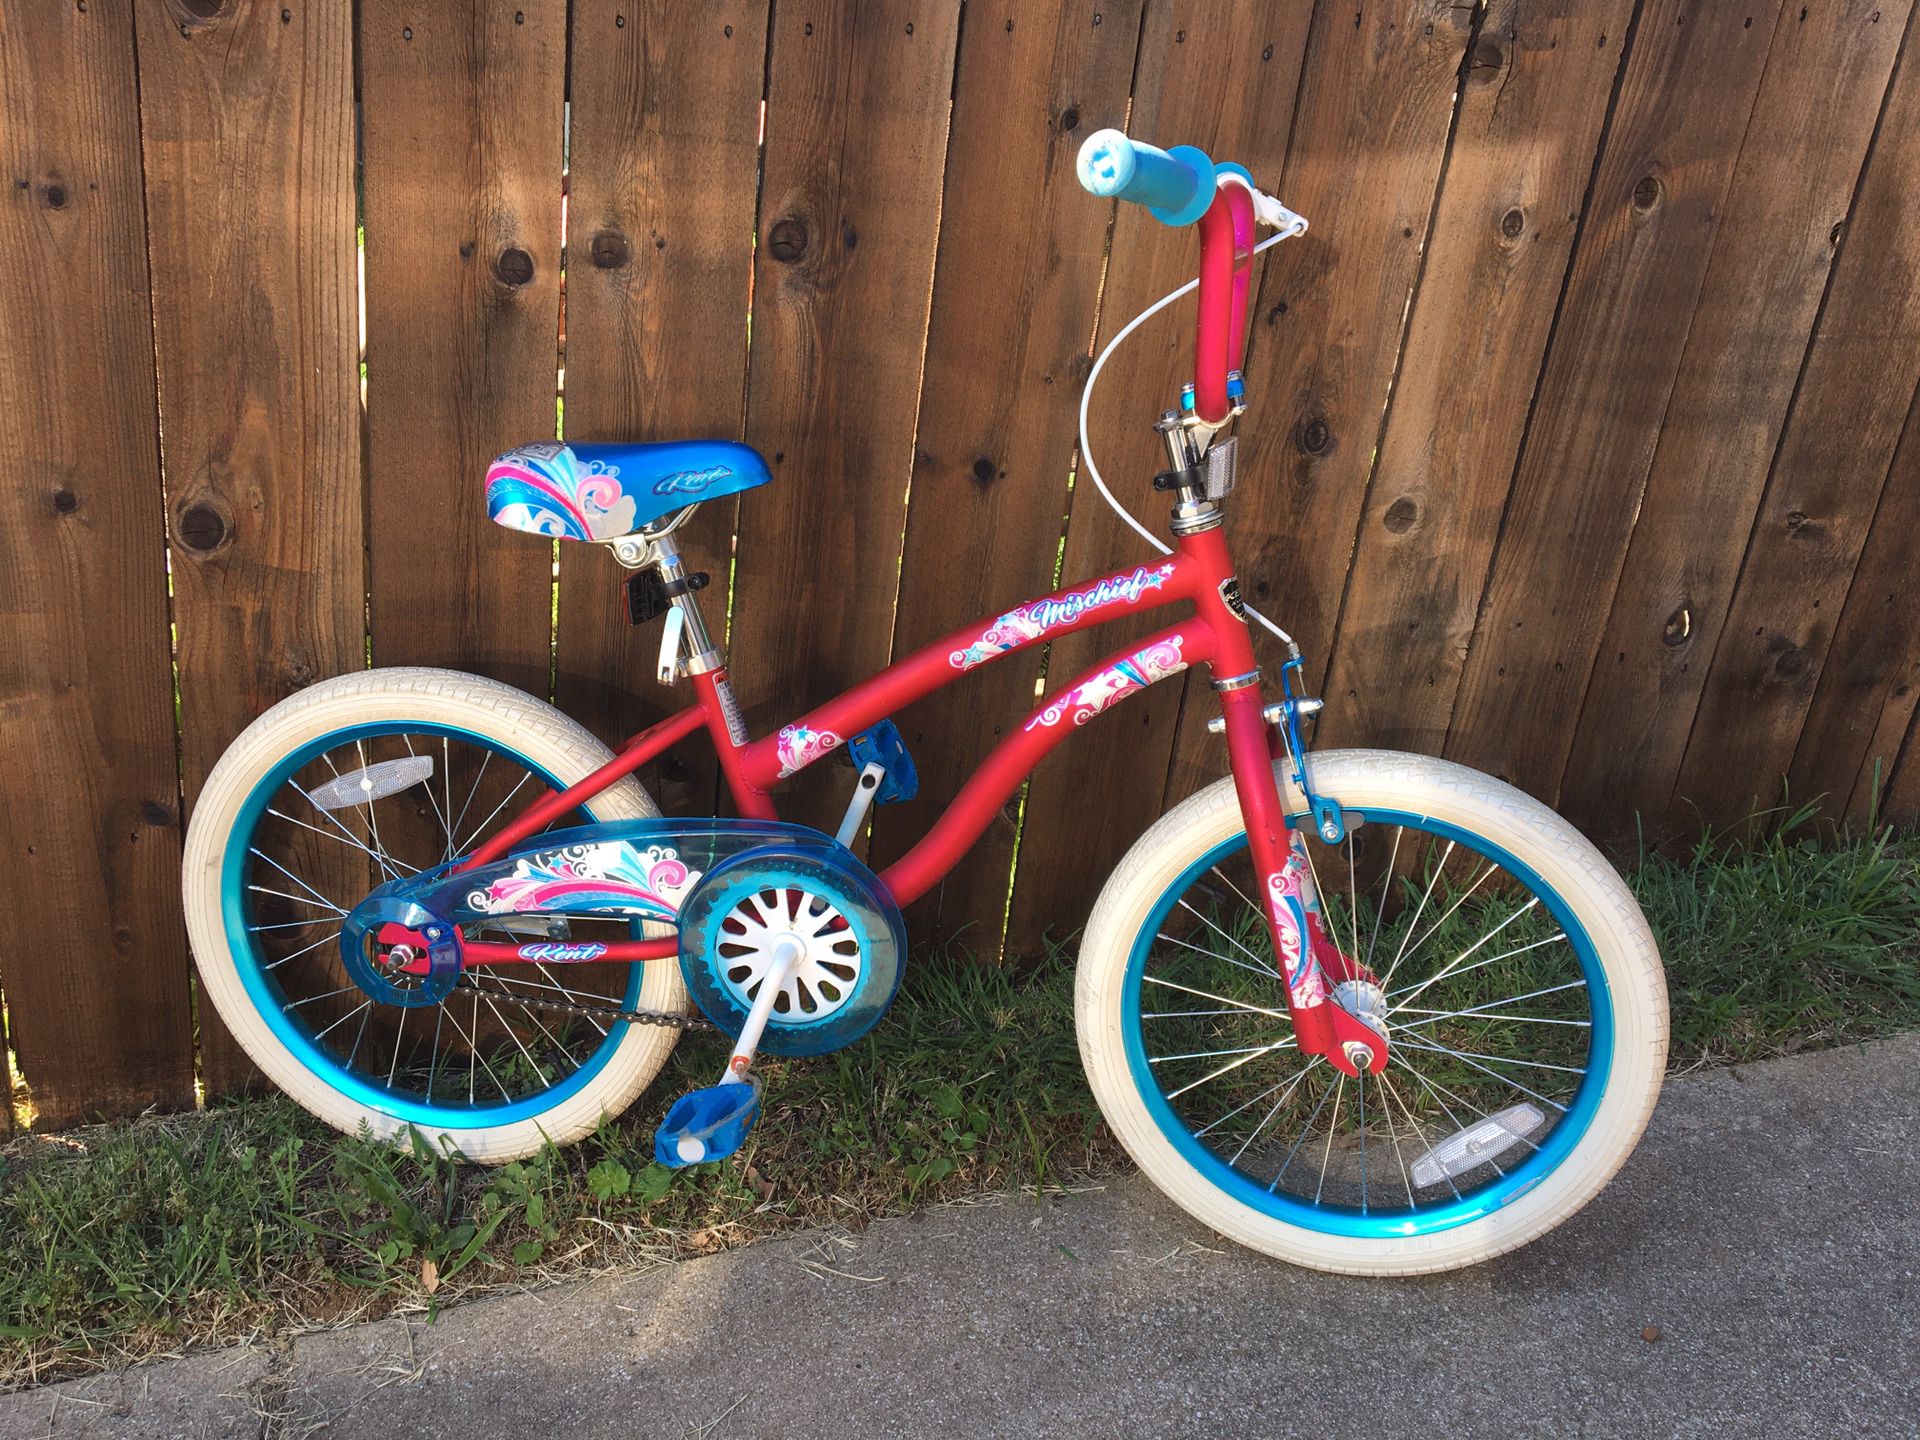 Kent “Mischief” bike. Garage kept! Very good pre-owned condition.